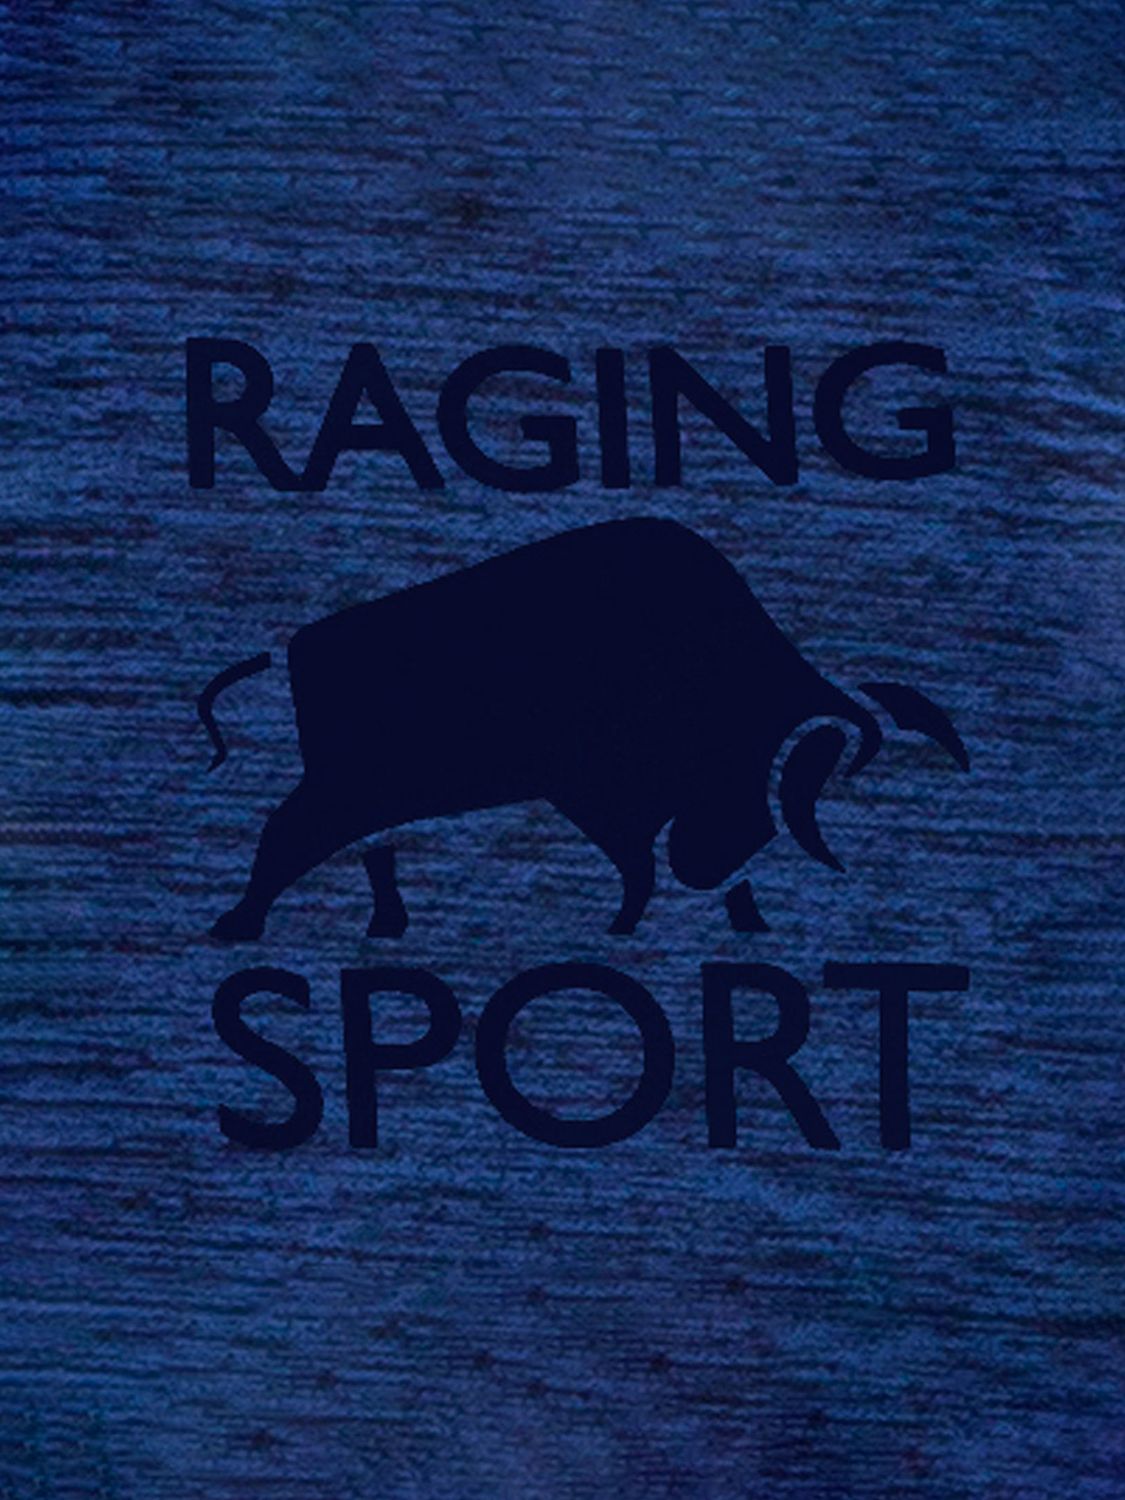 Raging Bull Performance Long Sleeve Gym Top, Navy, S